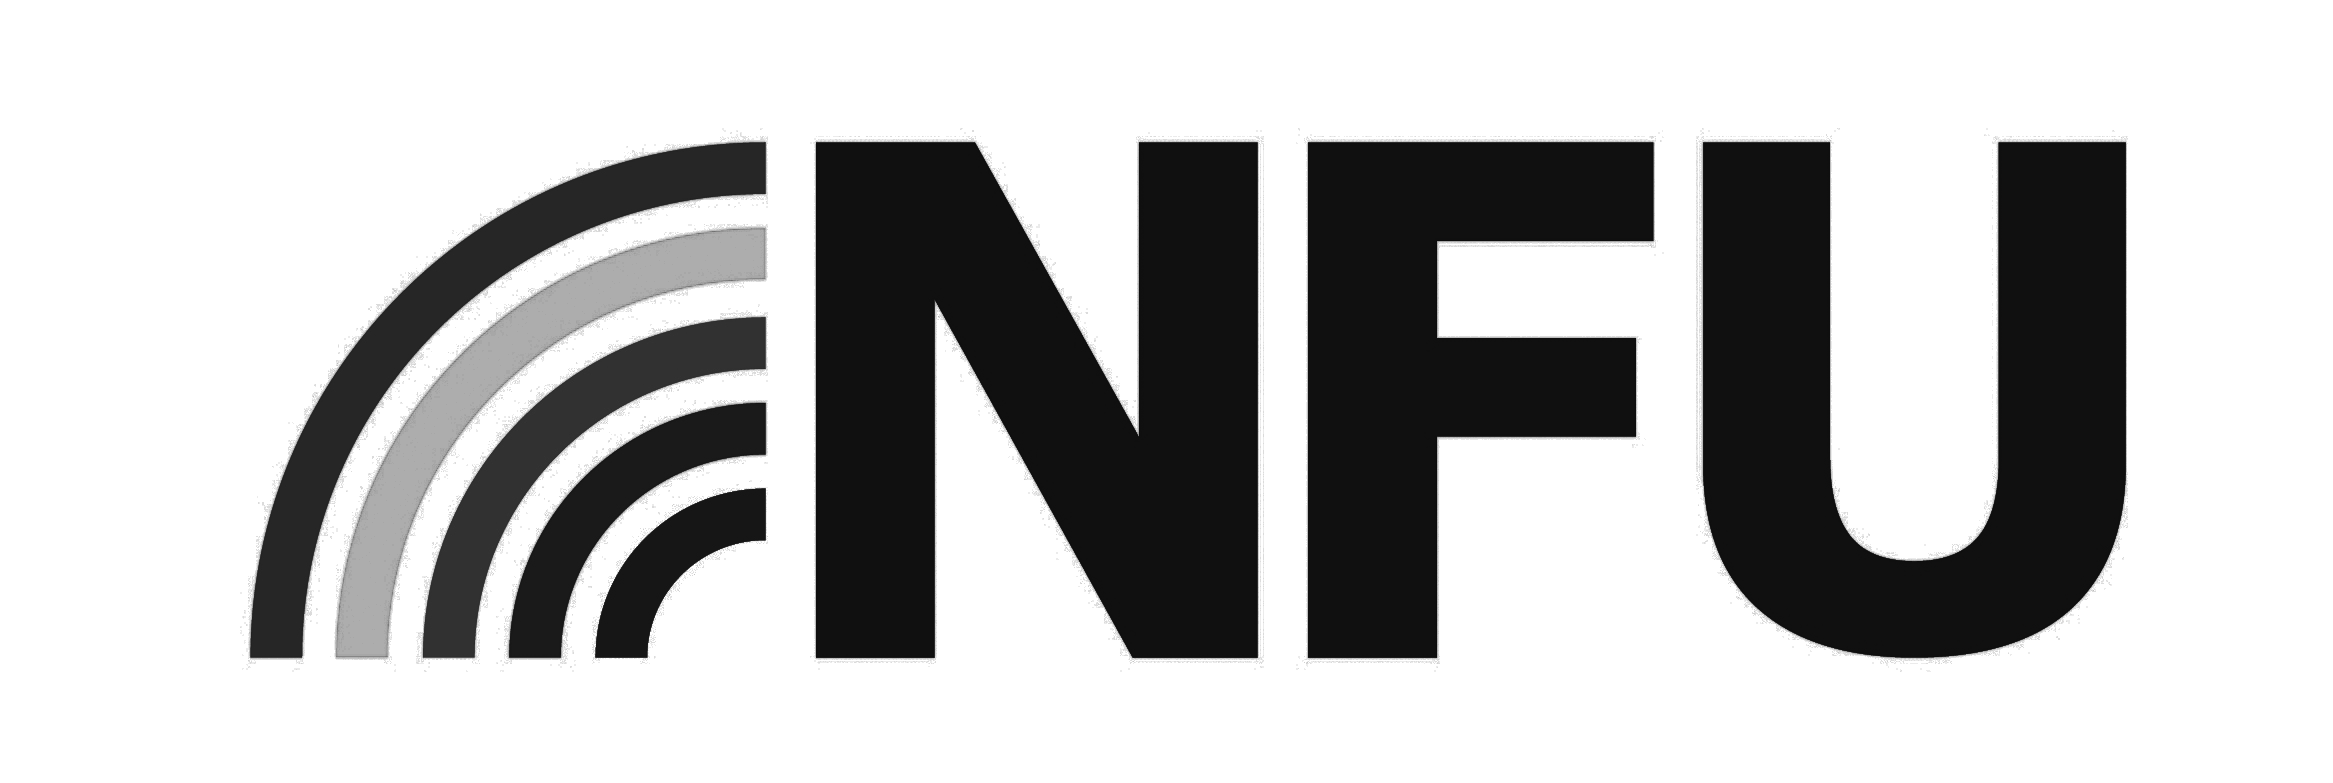 NFU_logo - black